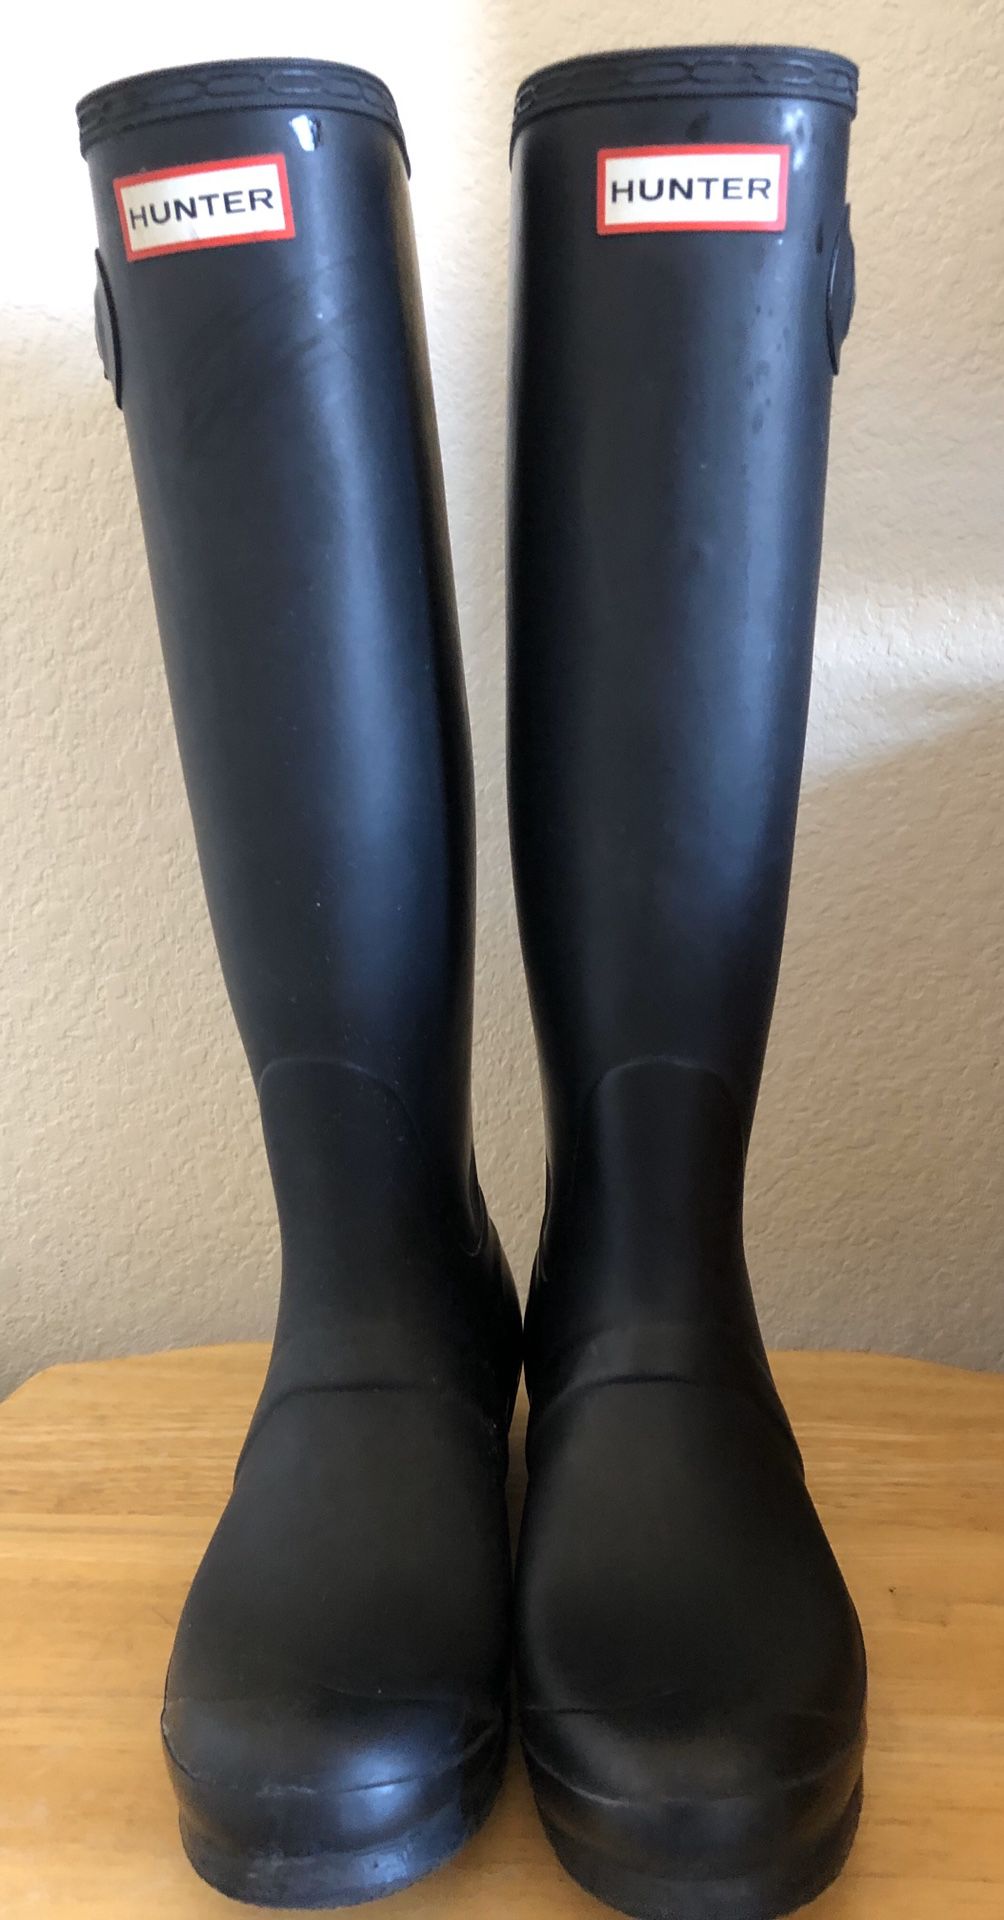 Hunter Original Tall Women’s Rain Boots - Black